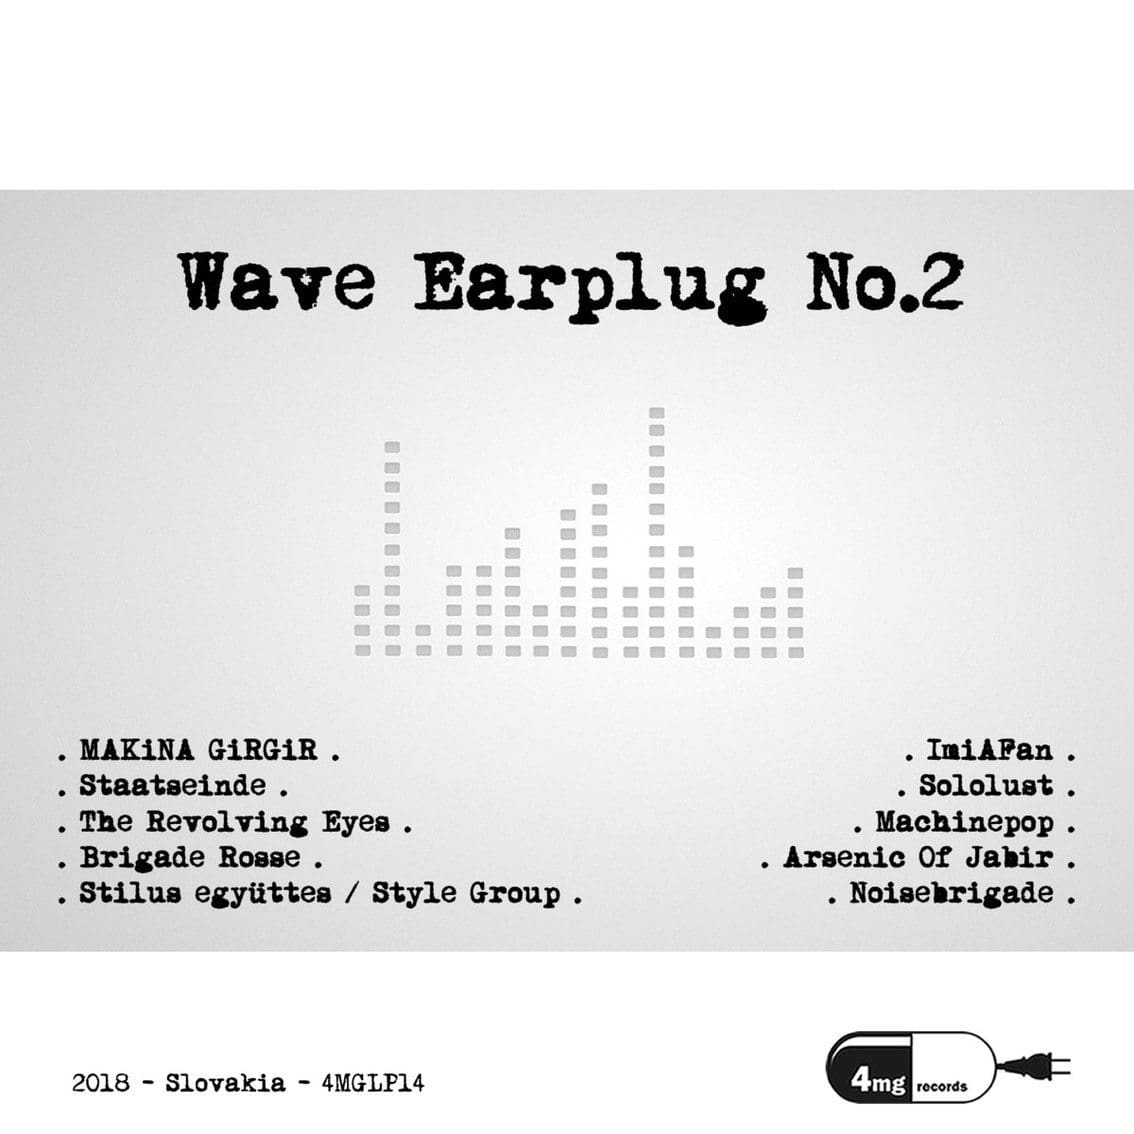 Wave Earplug compilation vinyl LP out next week